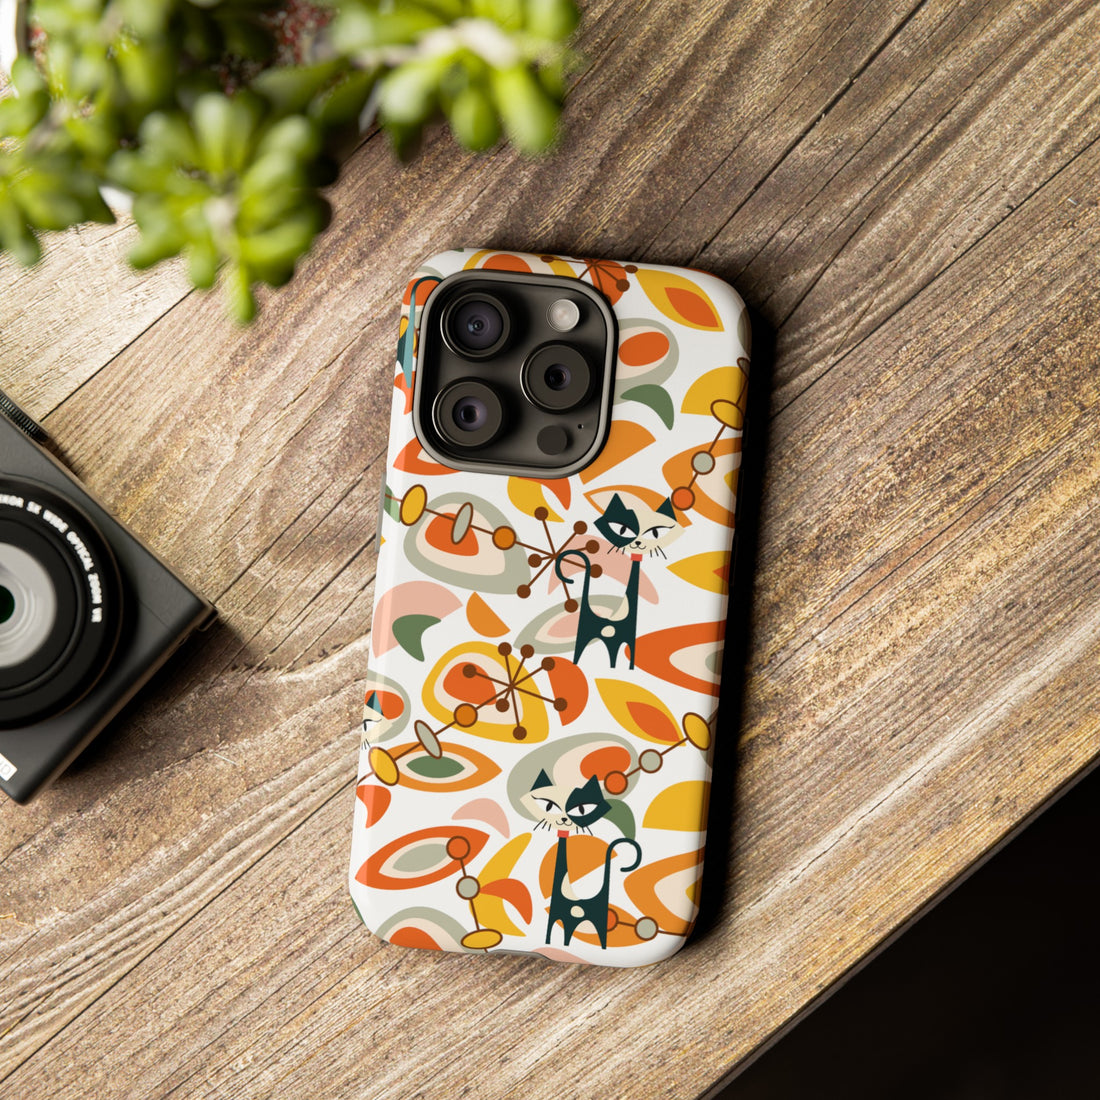 Atomic Cat Mid Mod Orange, Yellow, Groovy Cat Smart Phone Tough Cases